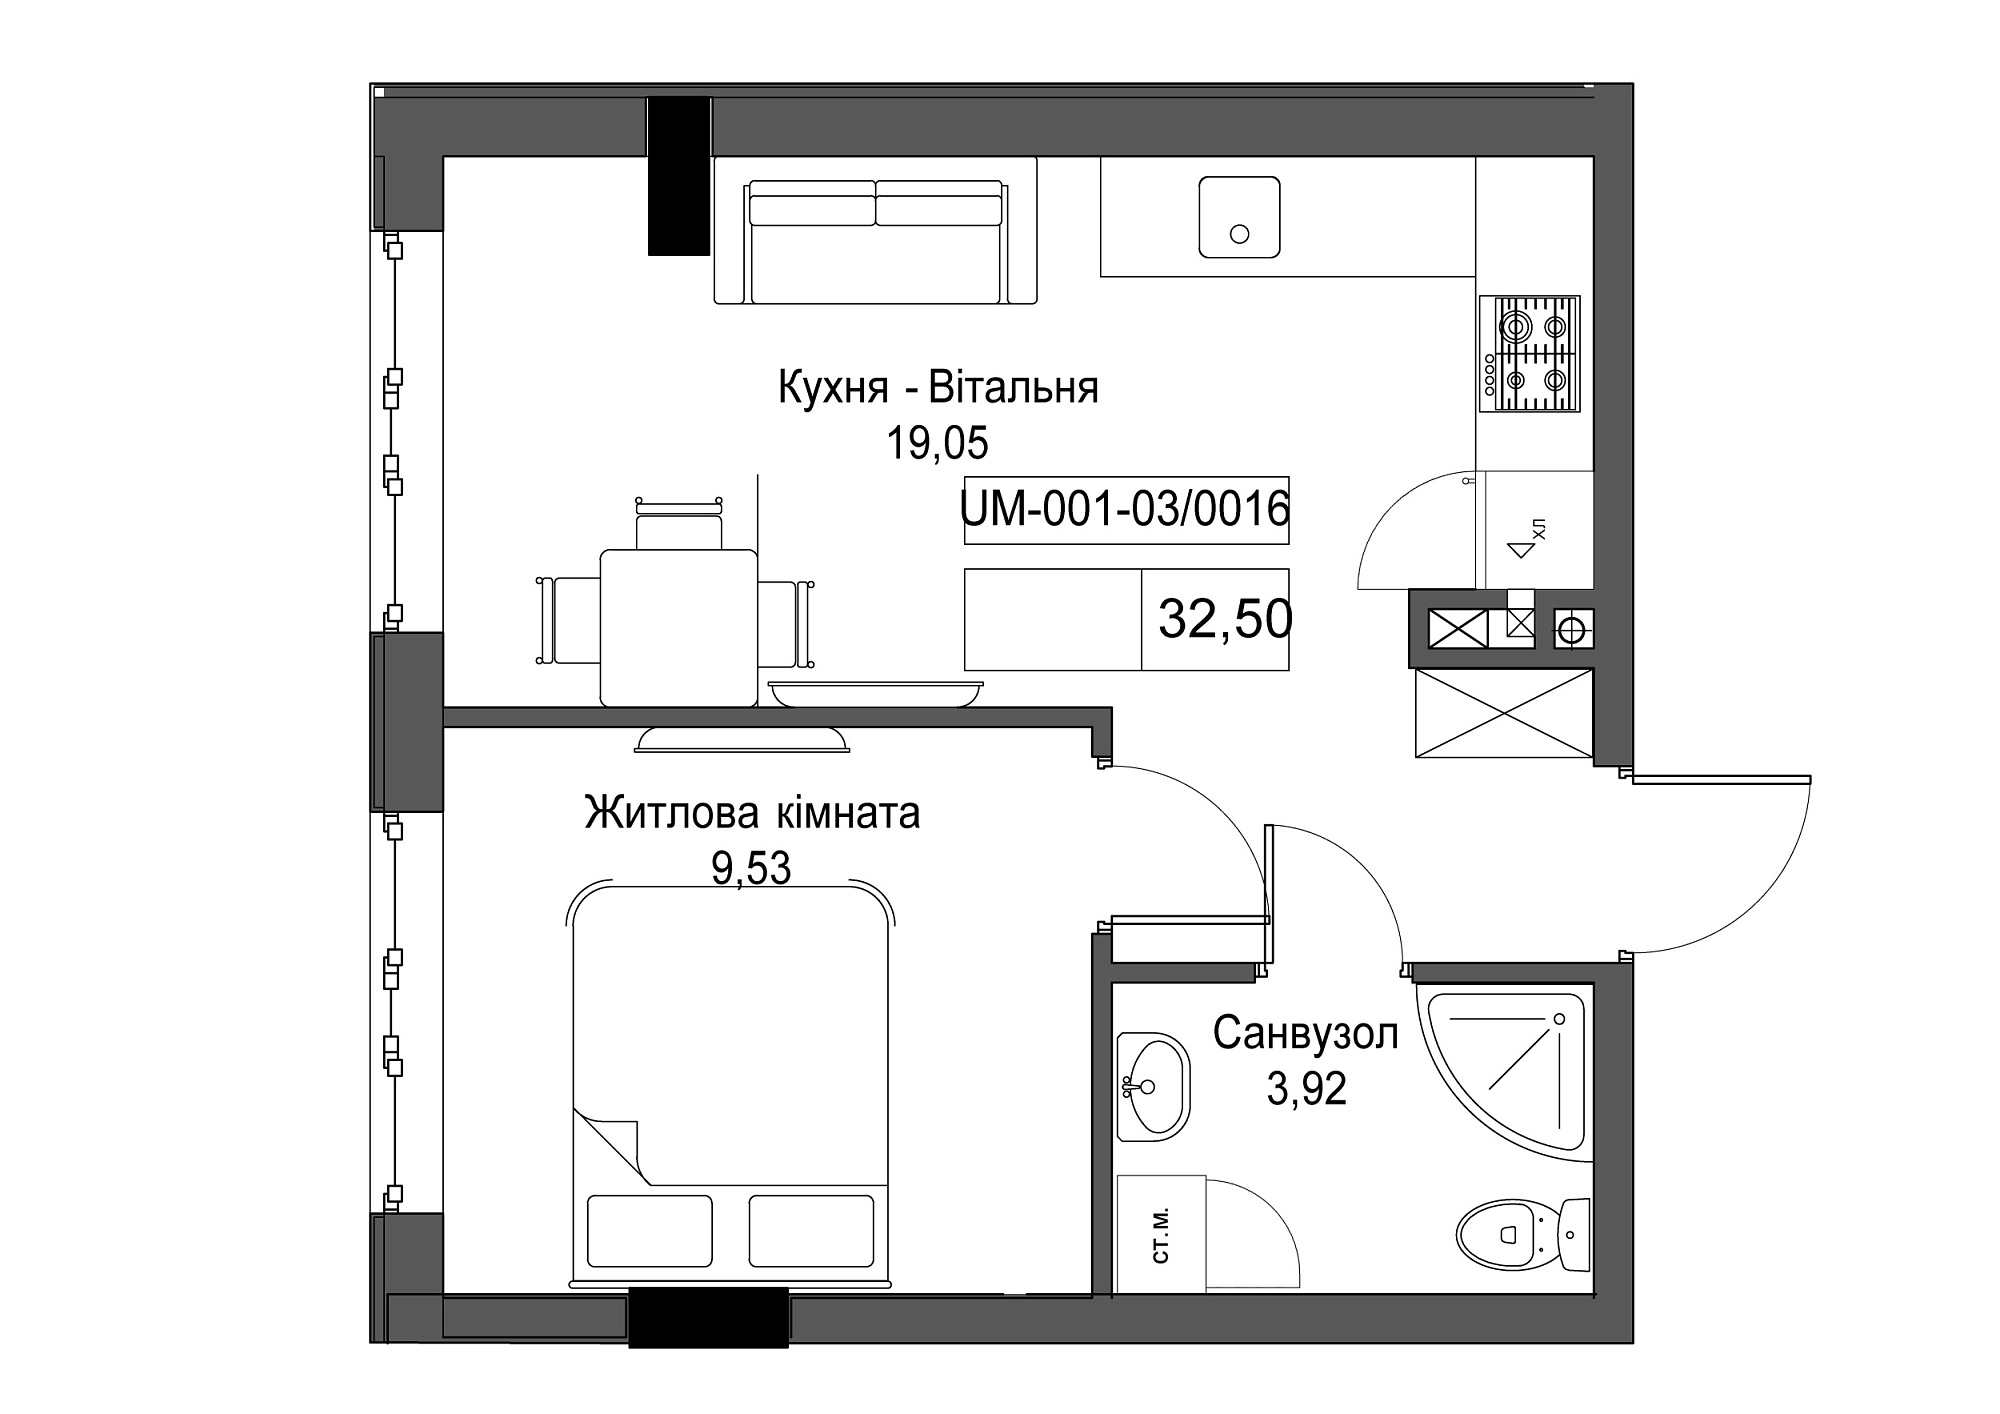 Планування 1-к квартира площею 32.5м2, UM-001-03/0016.